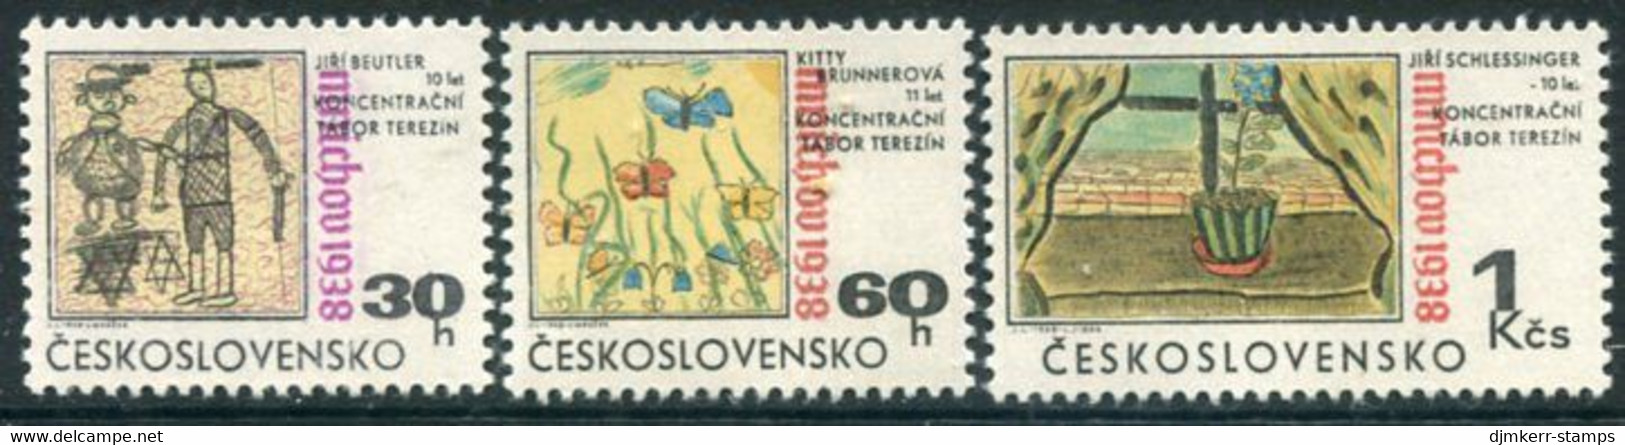 CZECHOSLOVAKIA 1968 Münich Agreement Anniversary MNH / **   Michel 1816-18 - Unused Stamps